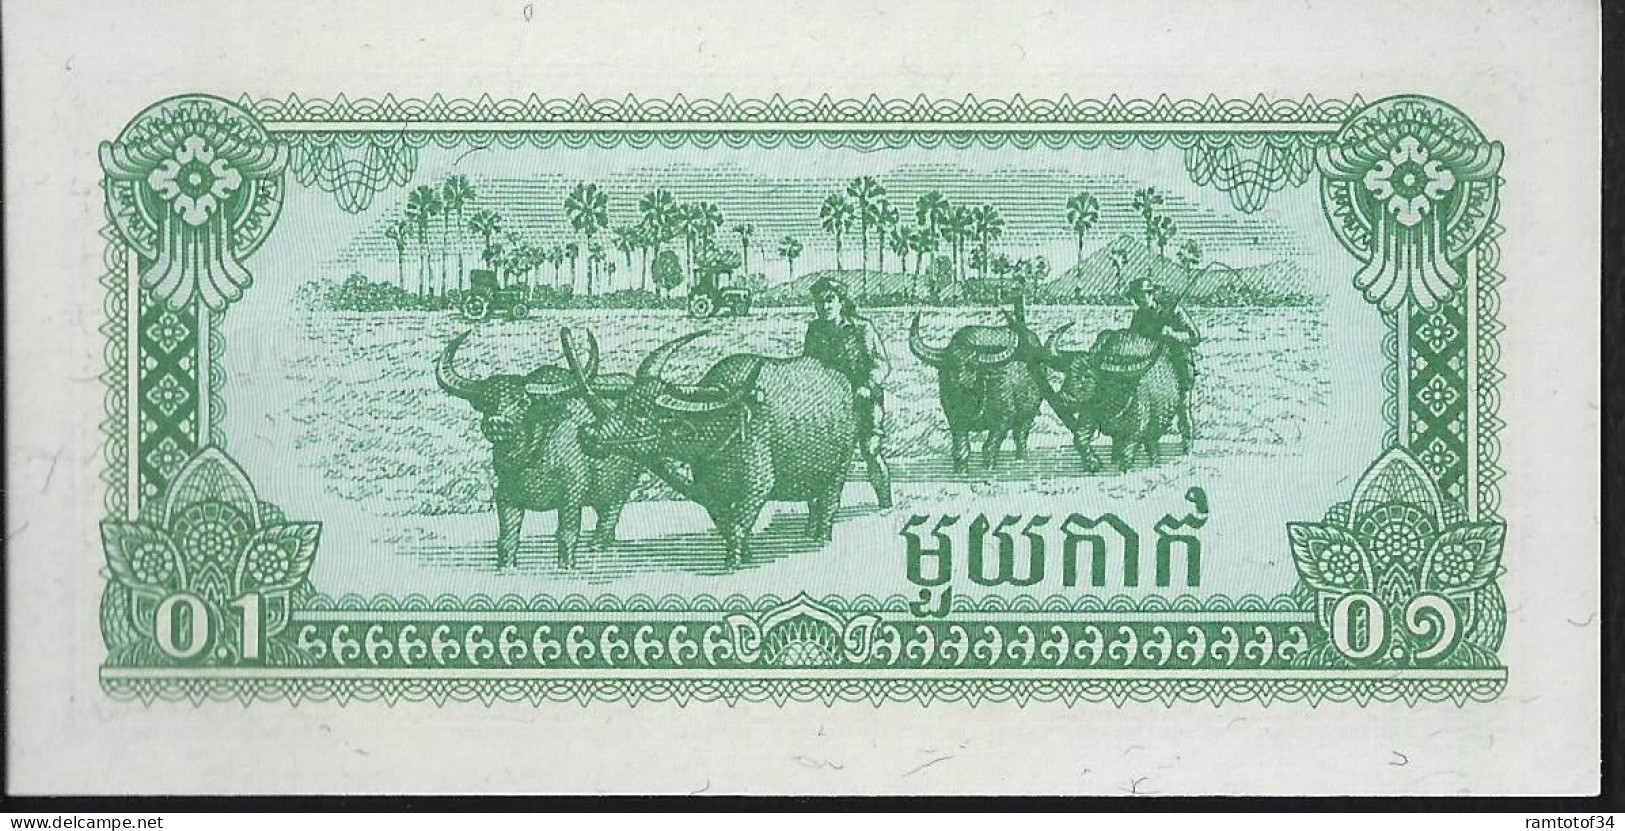 CAMBODGE - 0.1 Riels 1979 UNC - Kambodscha